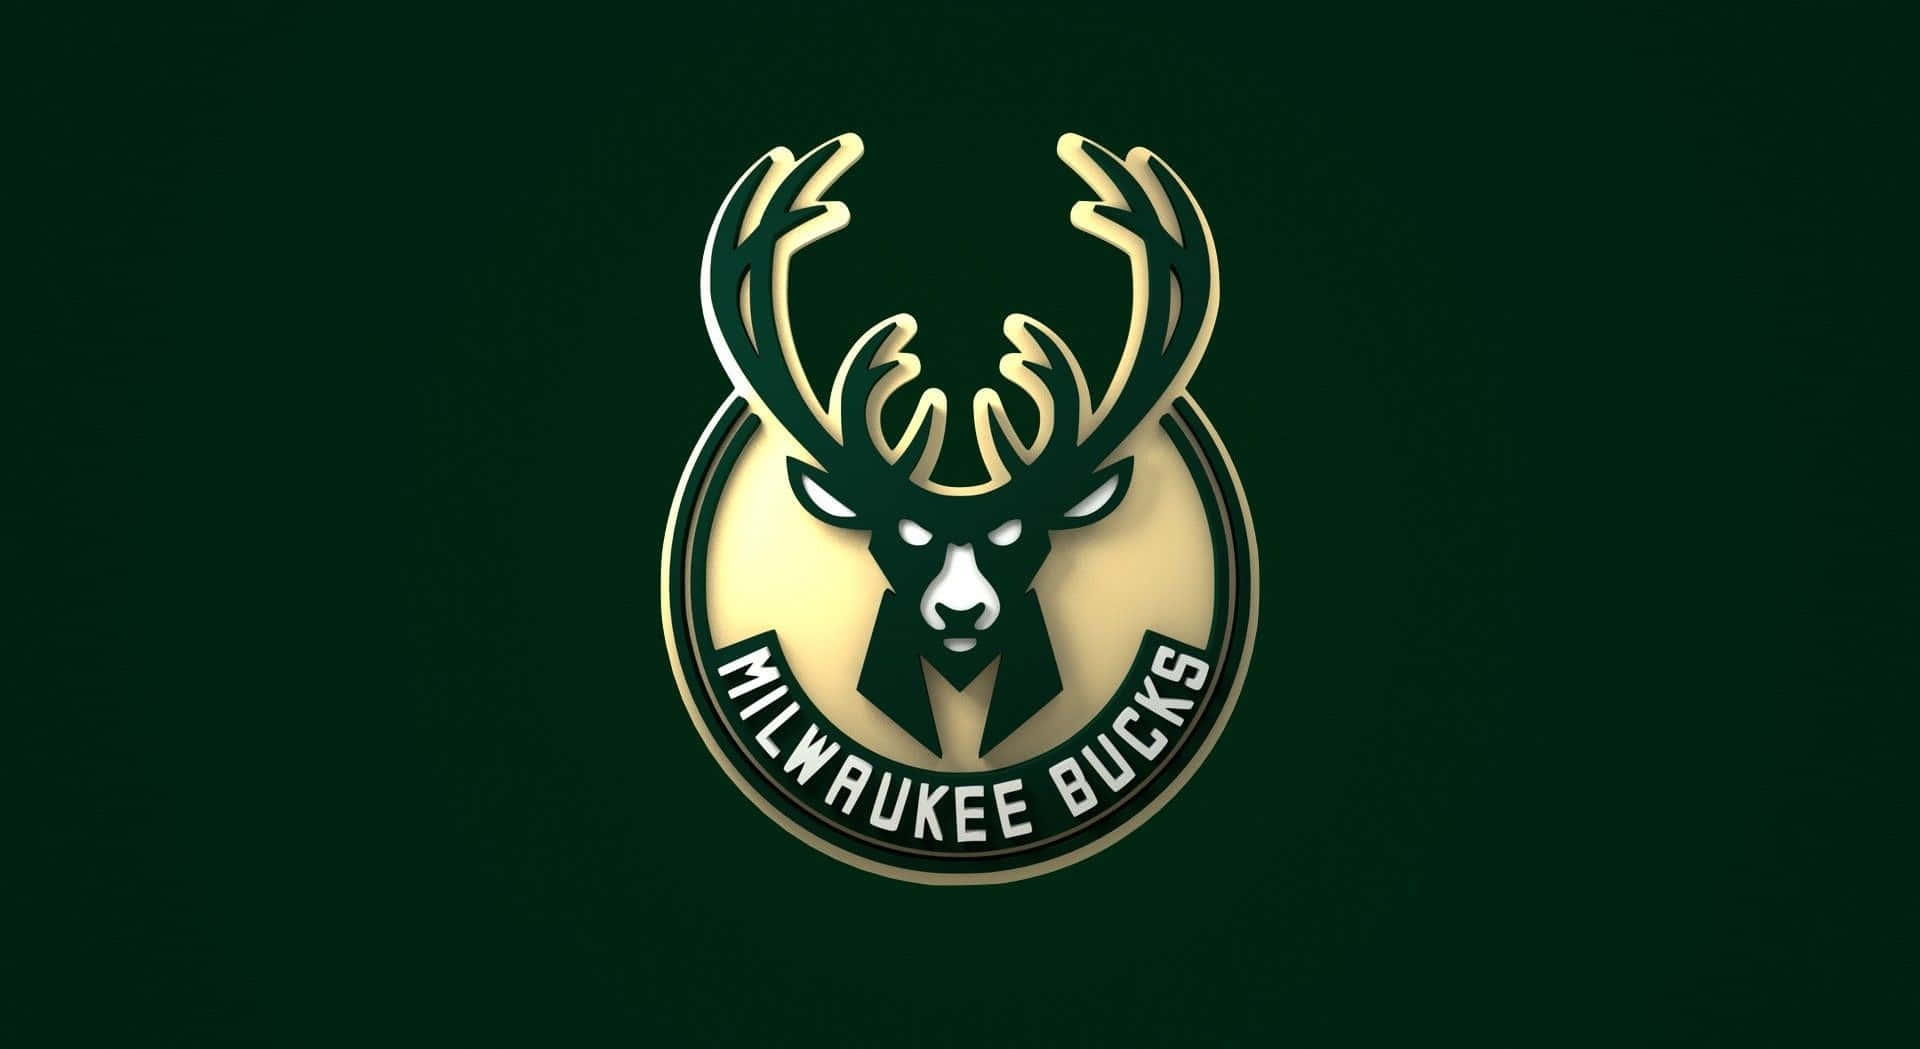 Ologotipo Do Milwaukee Bucks, Que Representa Uma Equipe Esportiva Icônica Na Nba. Papel de Parede